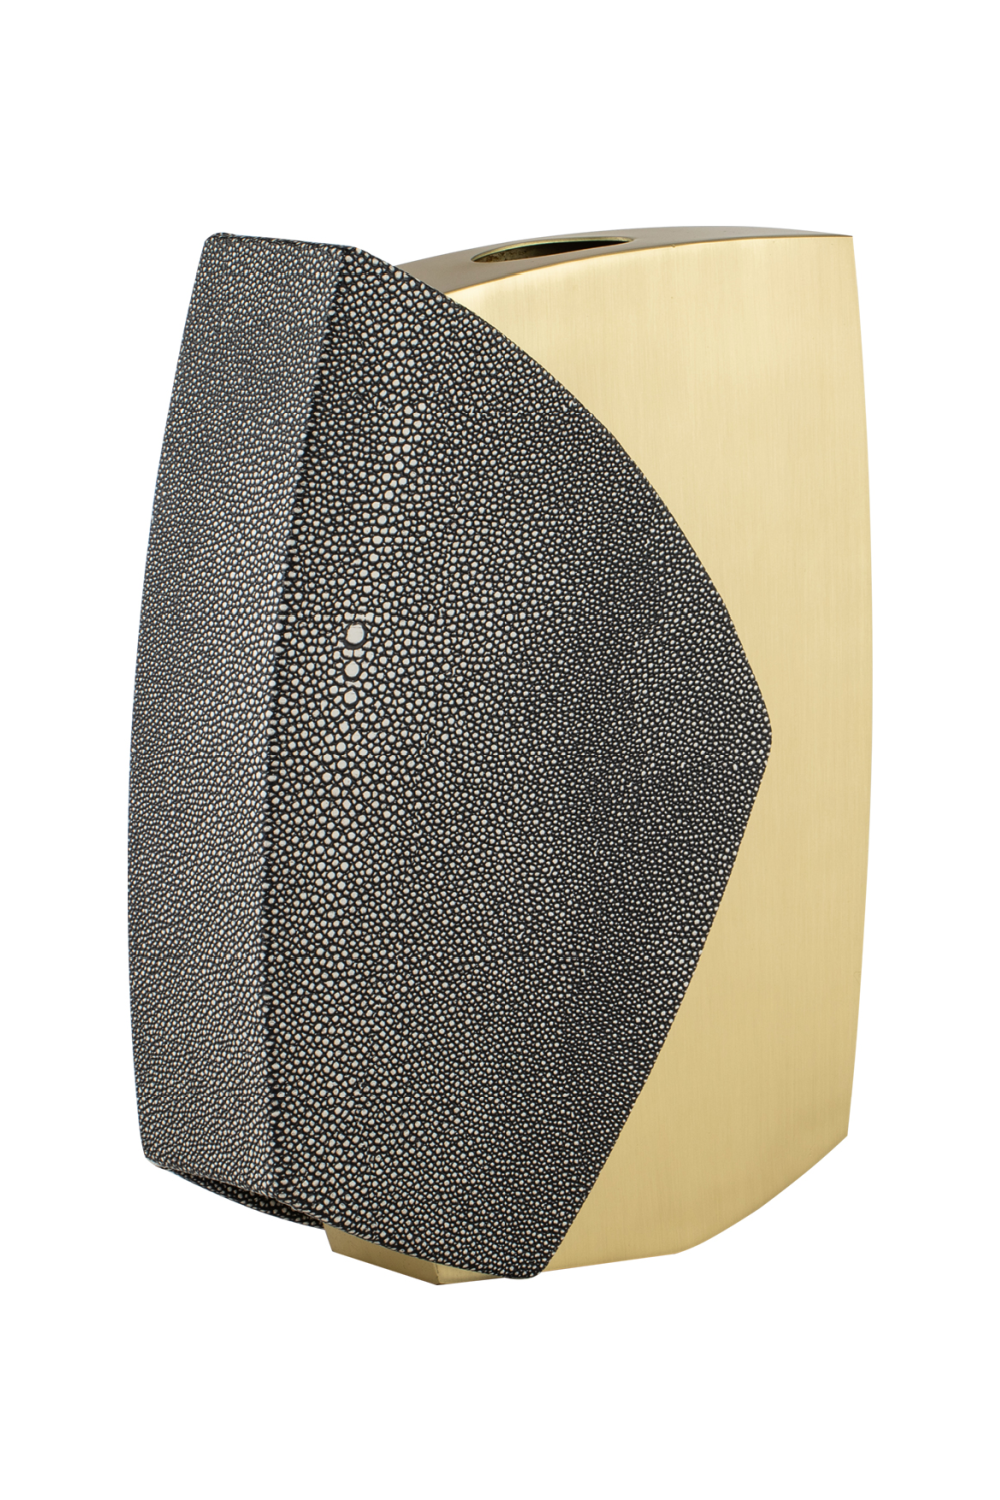 Shagreen Leather and Metal Vase | Liang & Eimil Raymond | Oroa.com